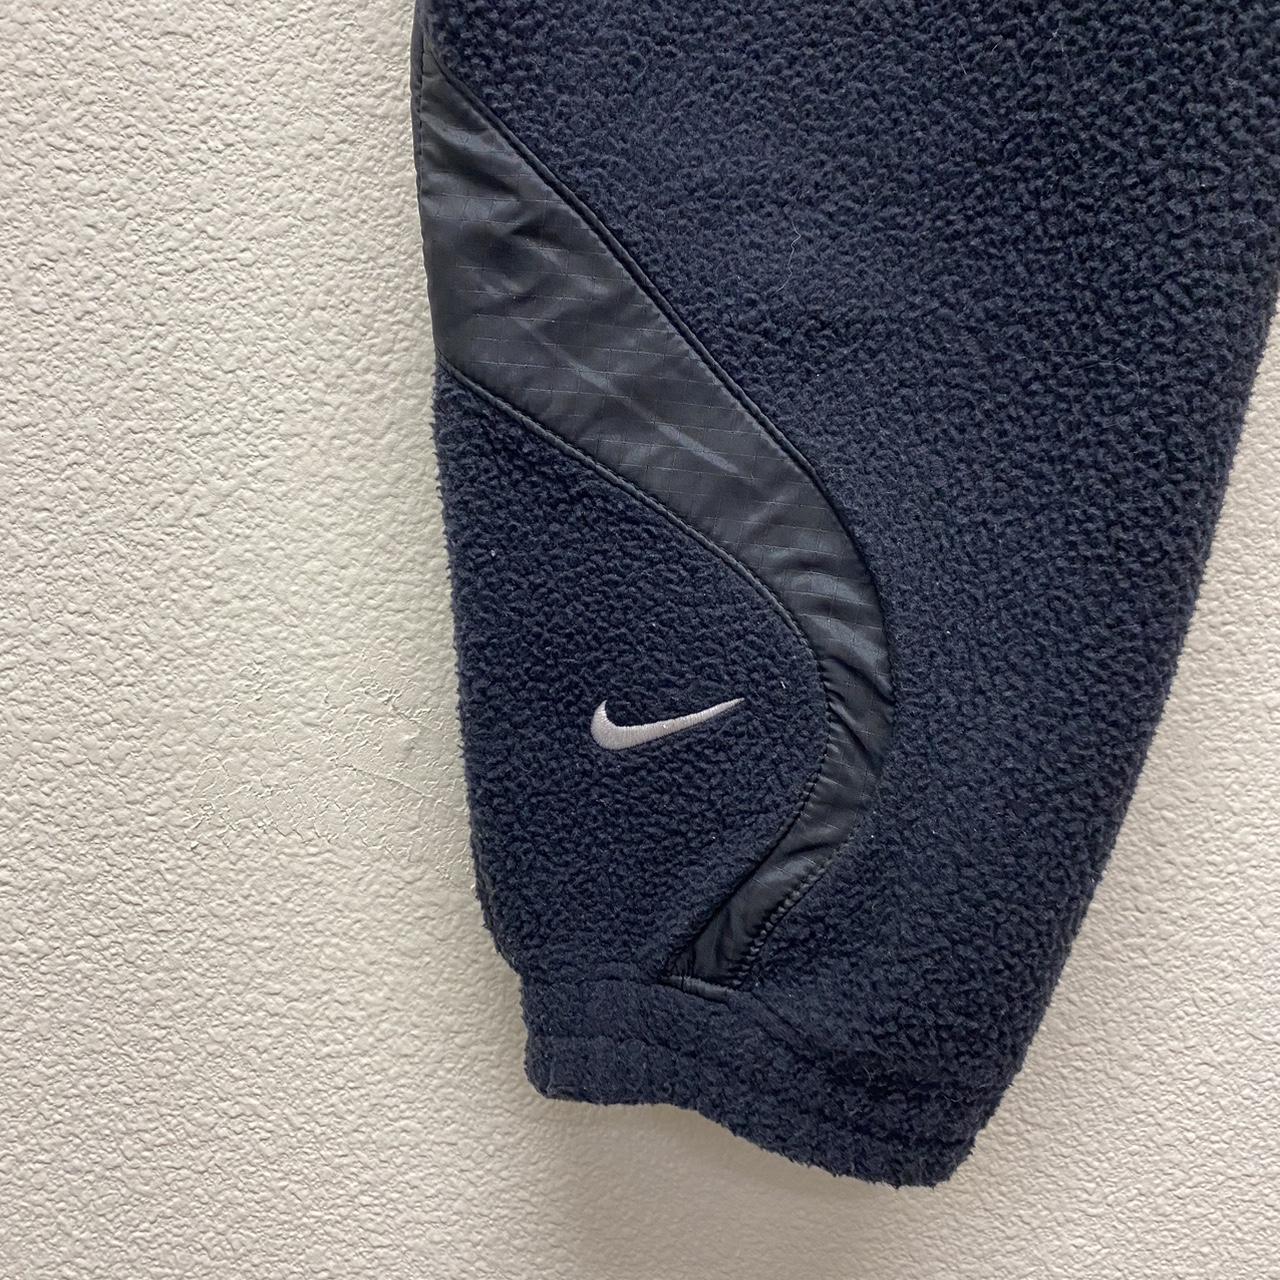 Nike Sherpa Sweatpants - great condition - black 